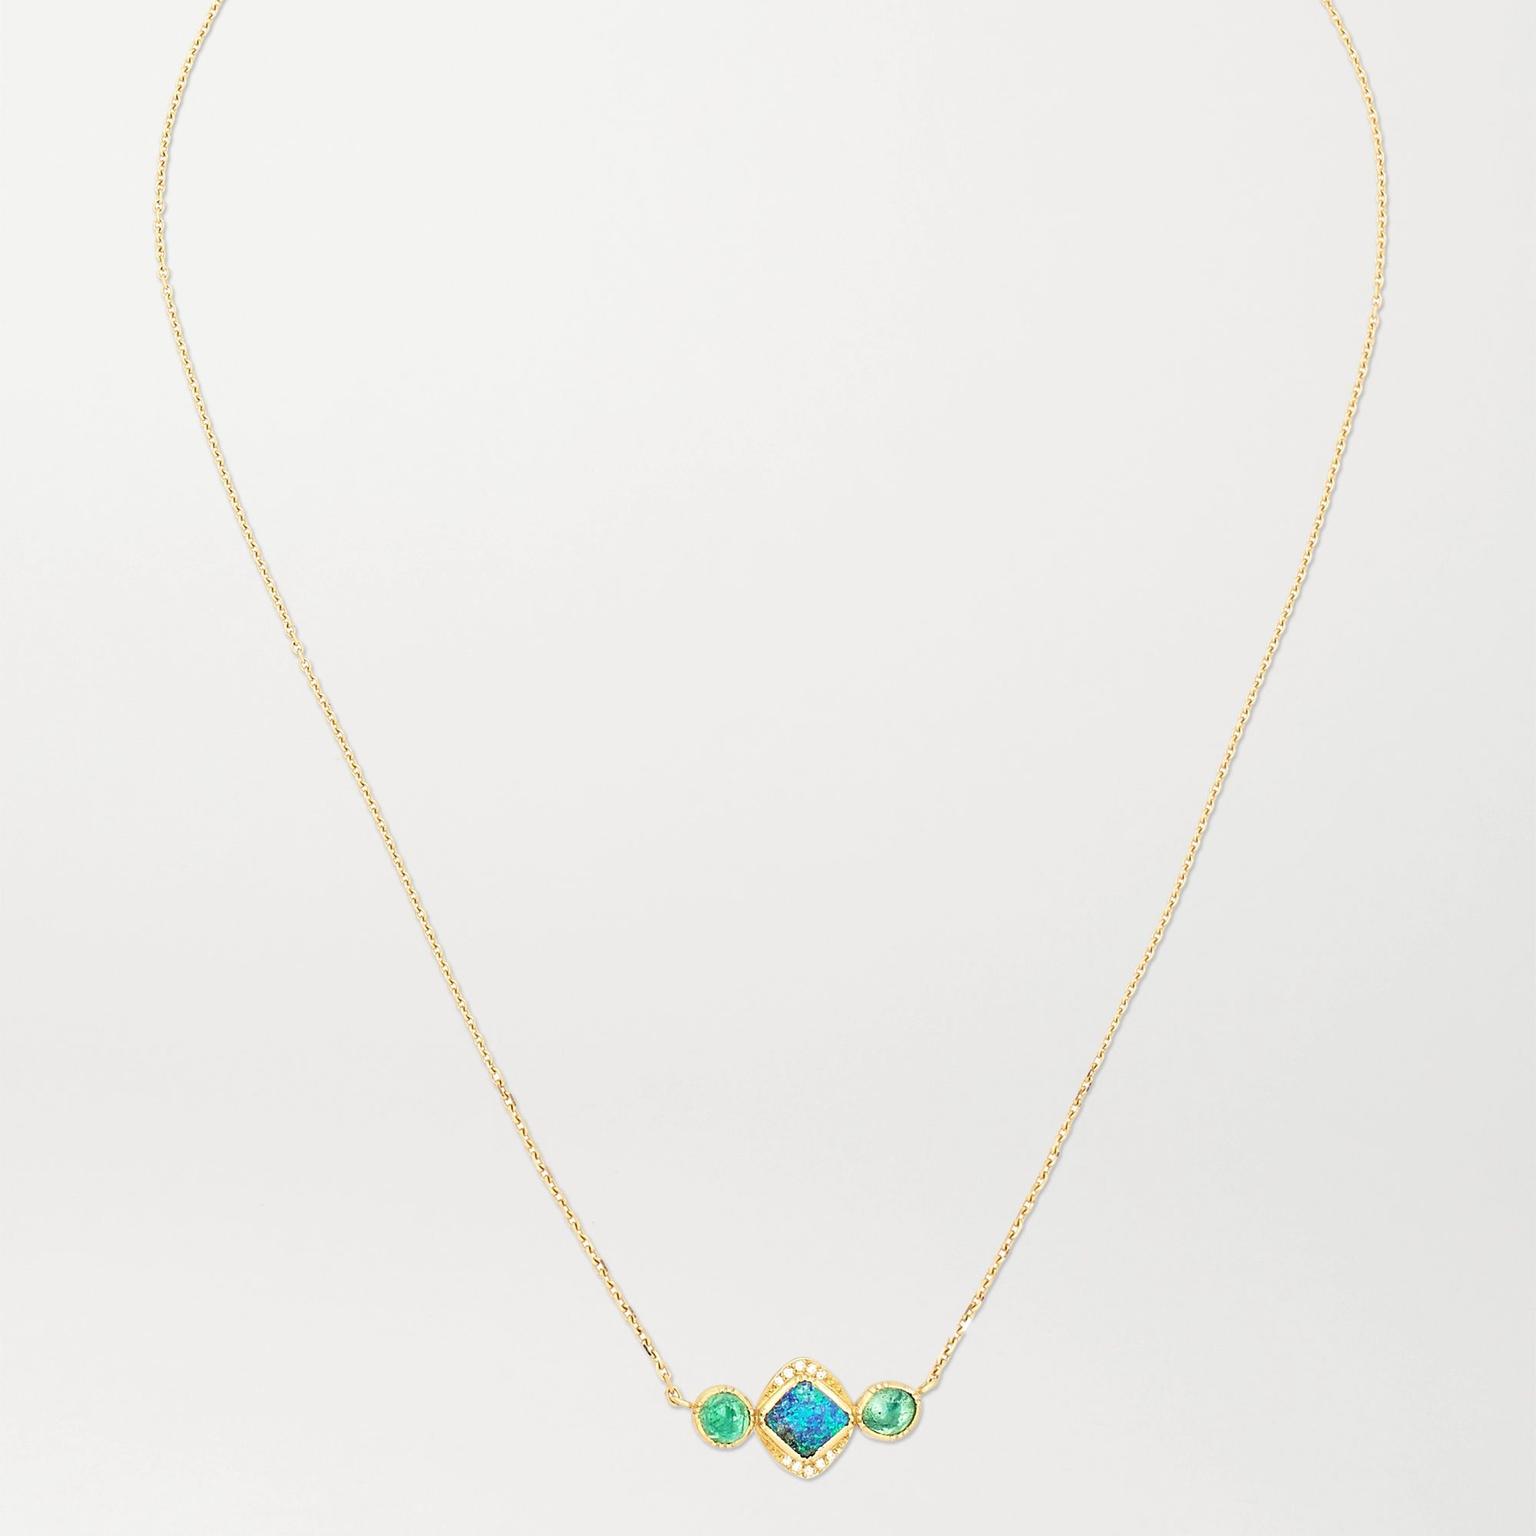 Orbit necklace by Brooke Gregson